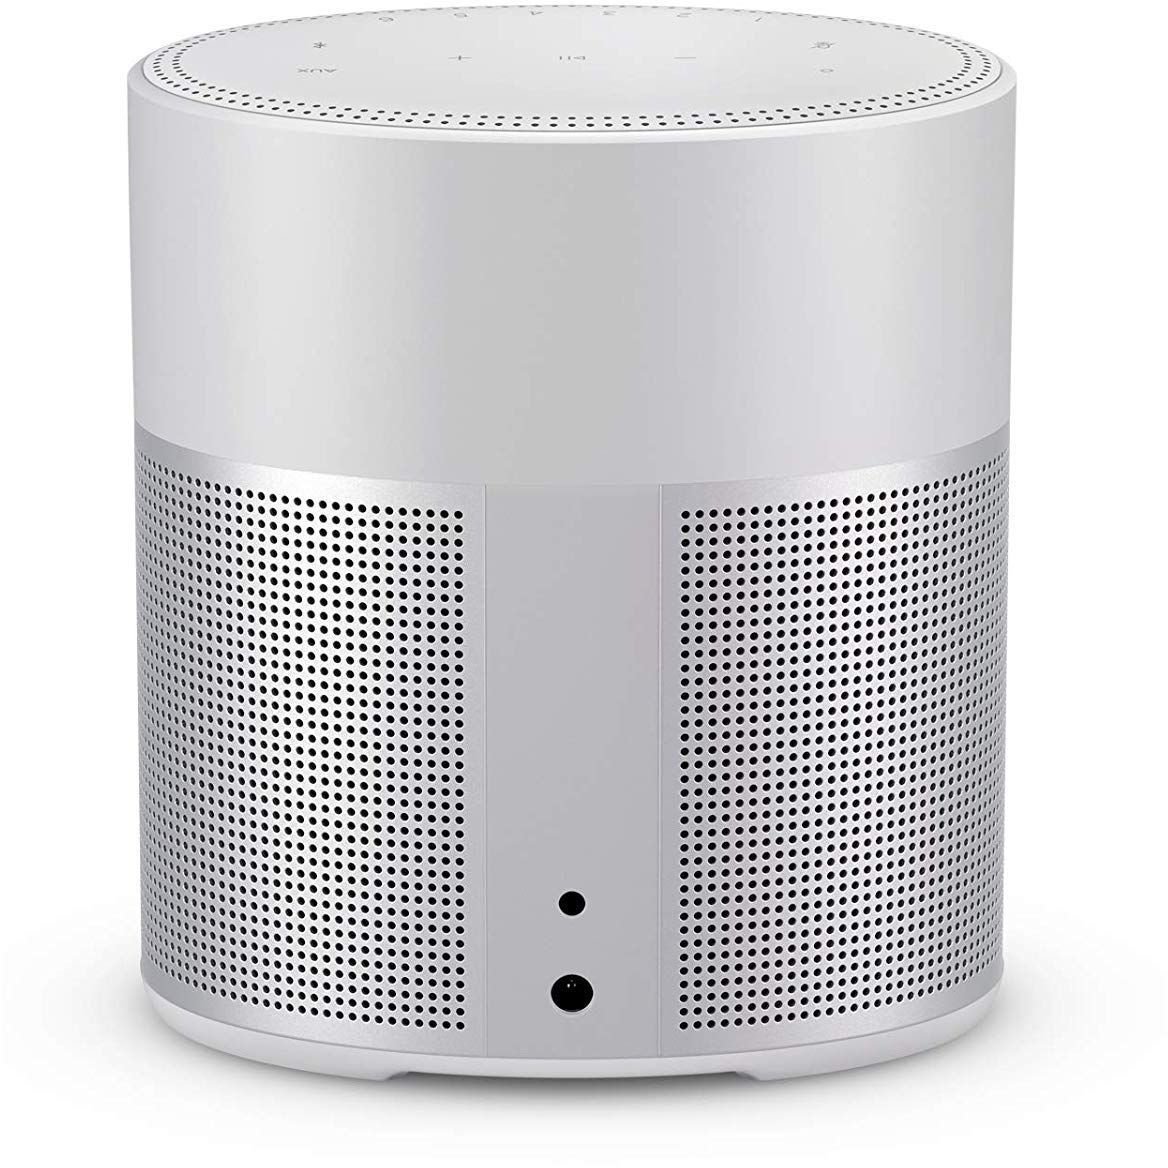 Domáci ozvučovací systém Bose Home Speaker 300 Silver